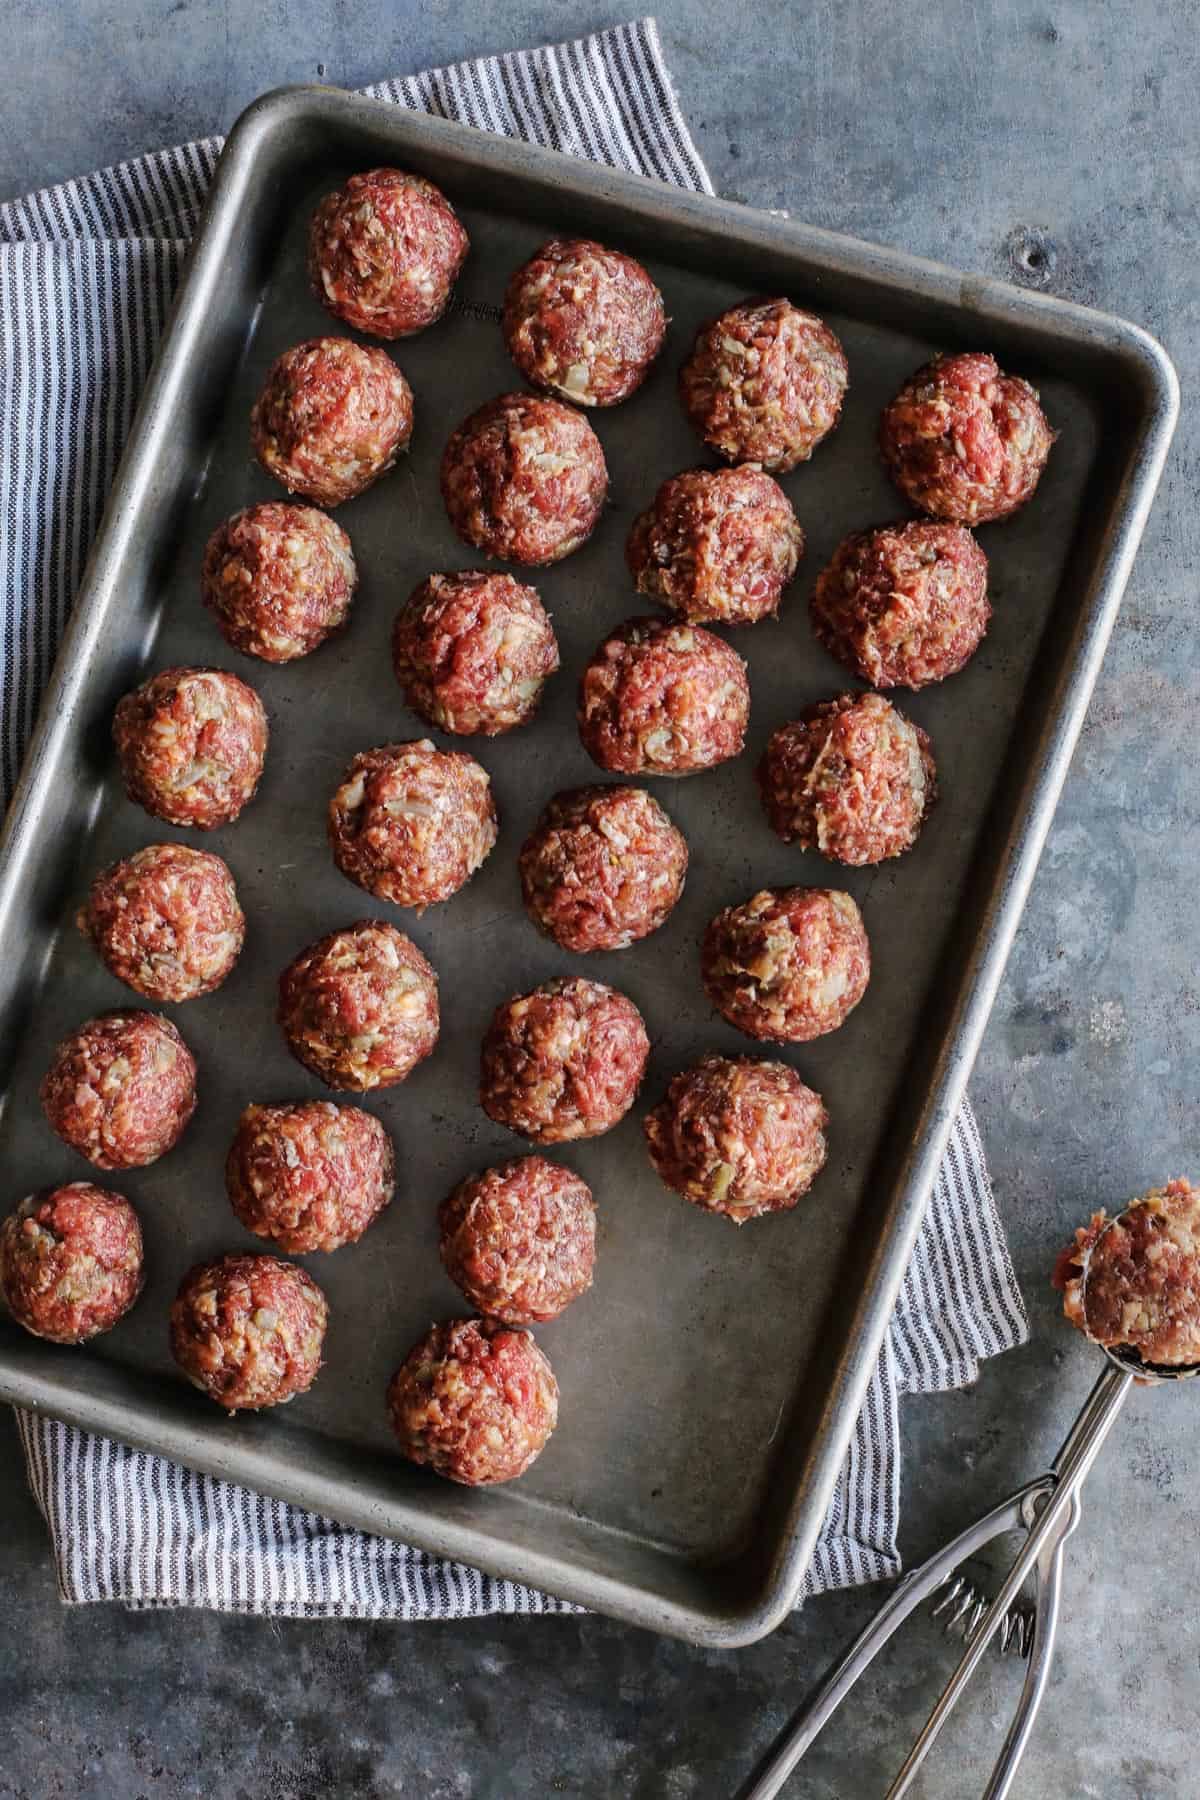 pan of uncooked meatballs 